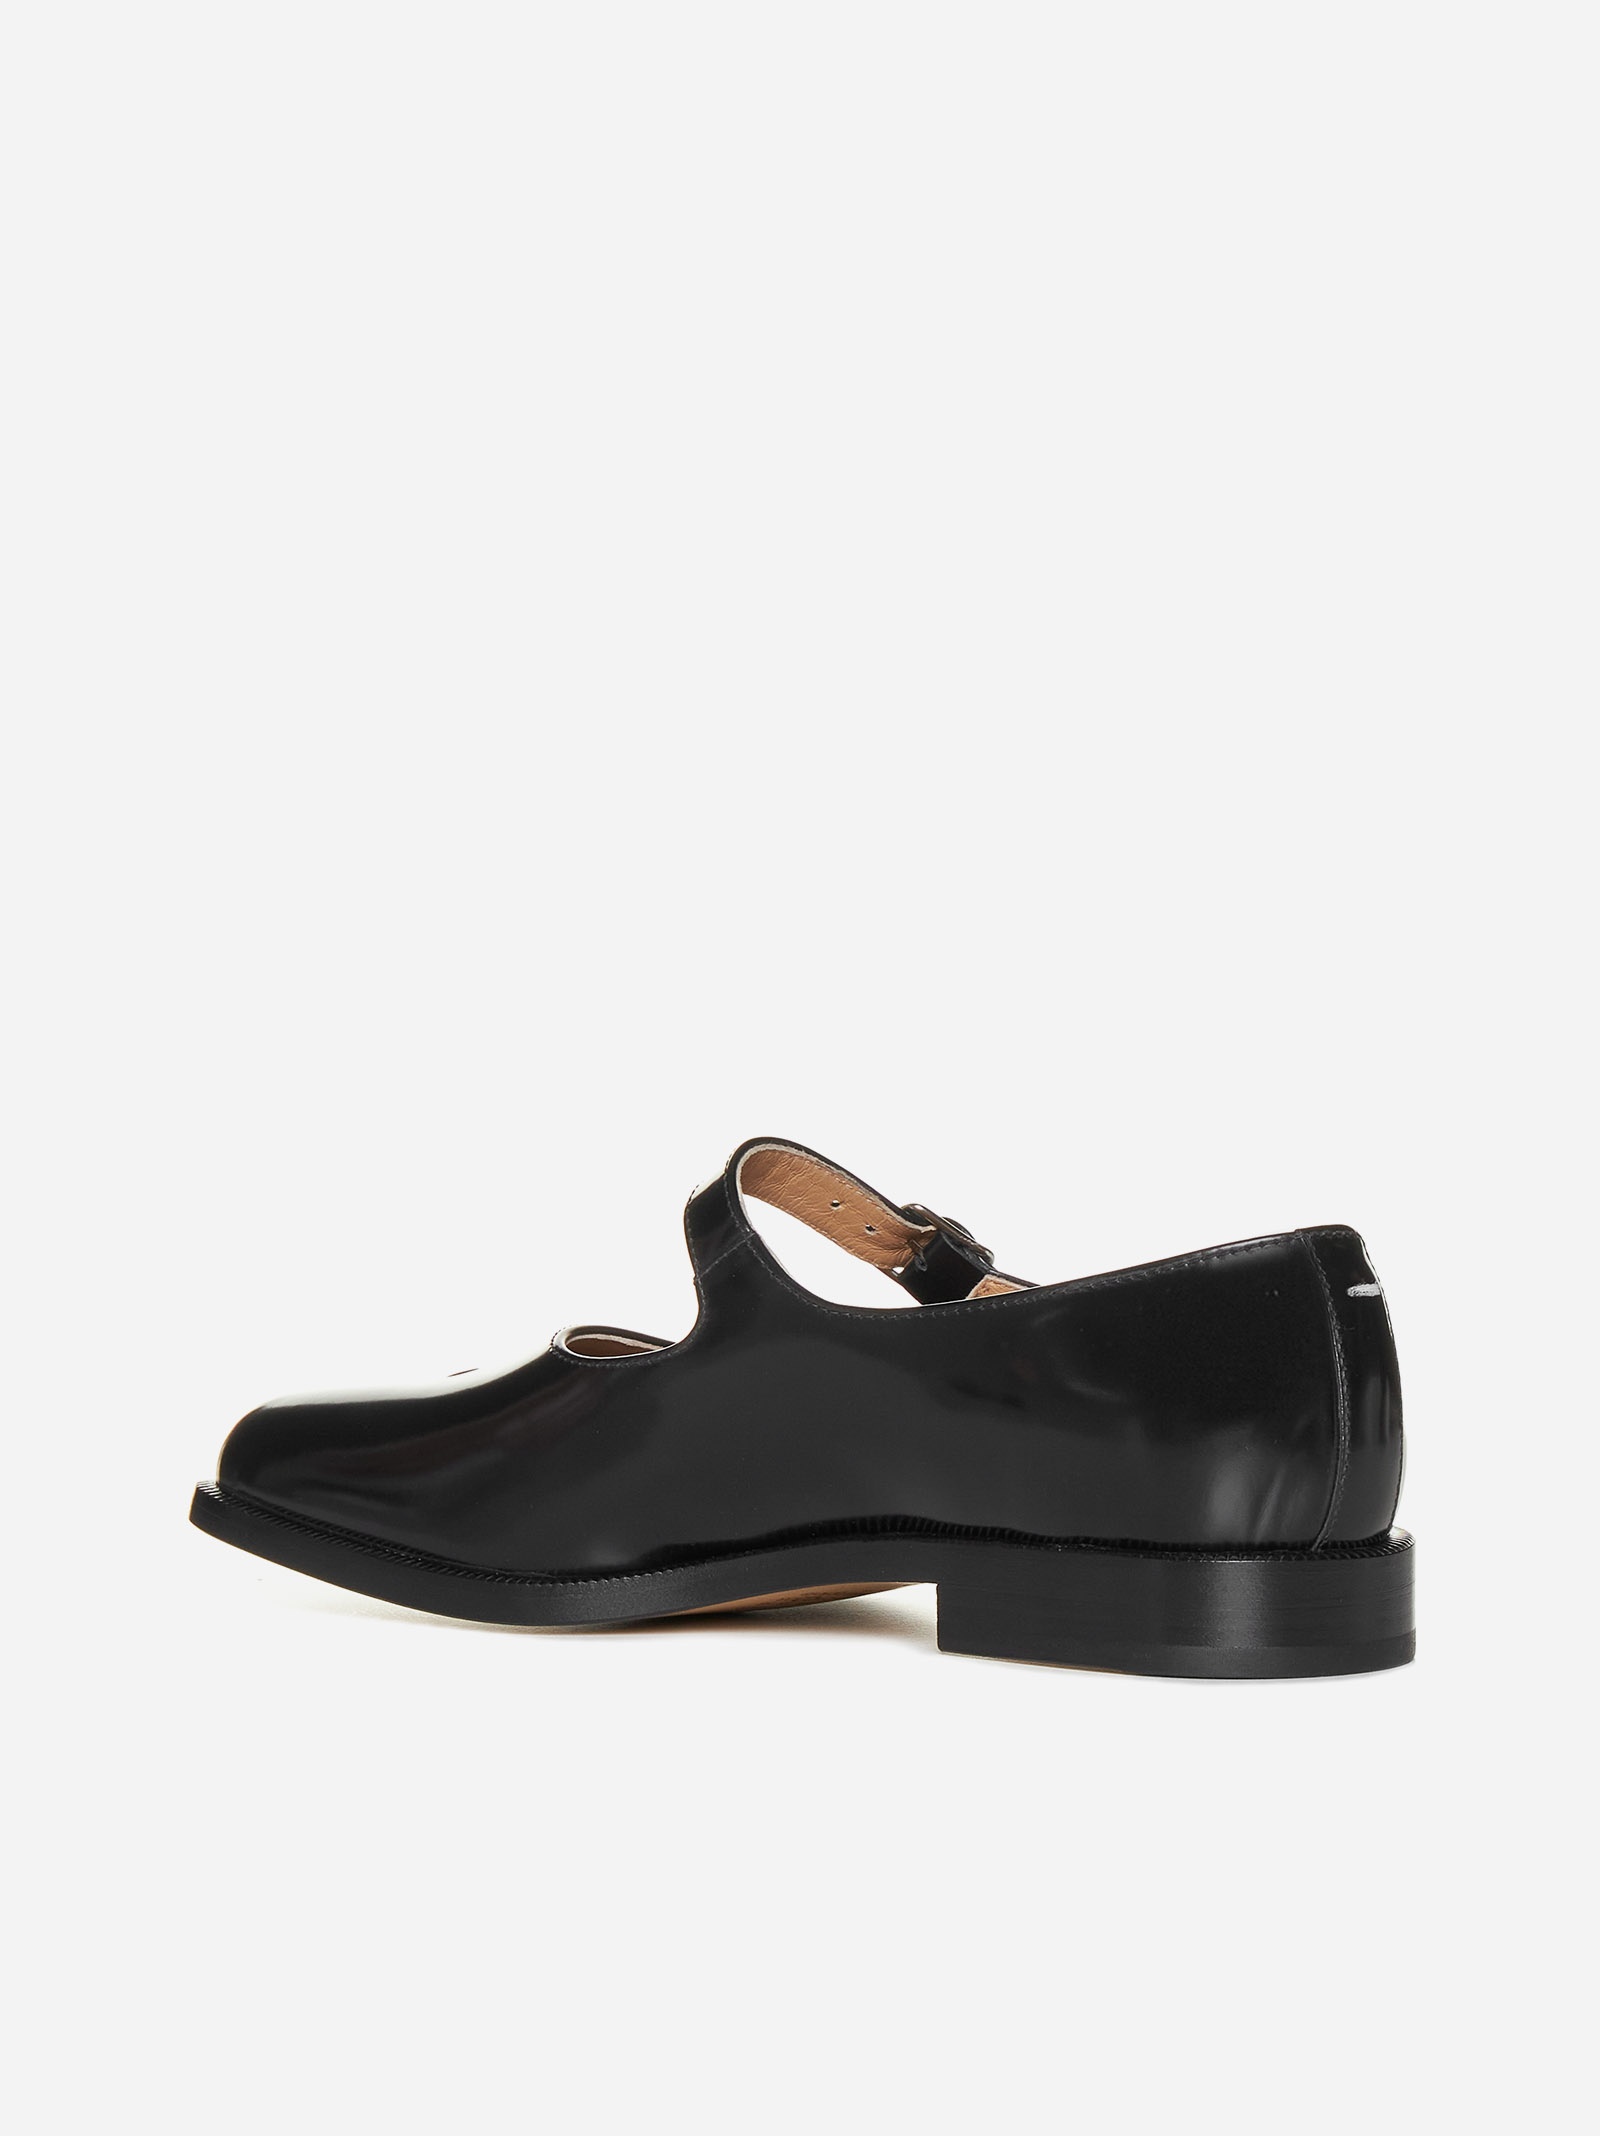 Tabi leather Mary Jane shoes - 3